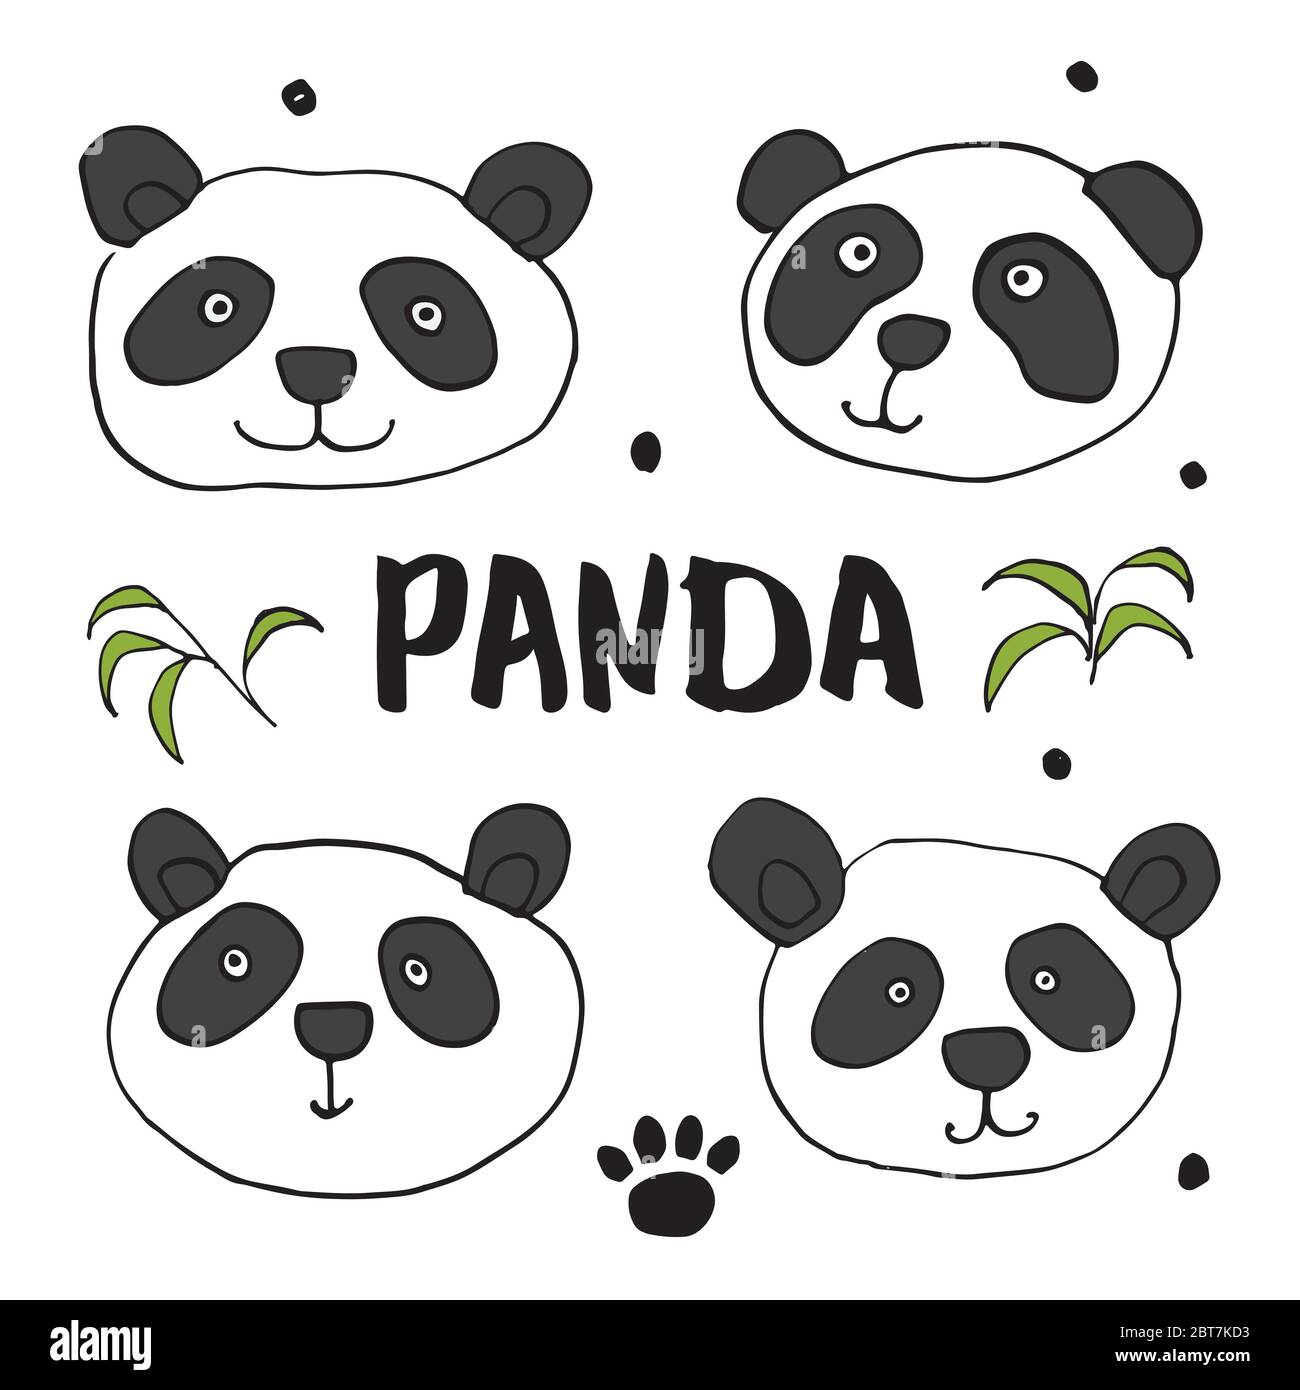 Cute Panda Hand Drawing Pencil Watercolor Stock Illustration 2102205688   Shutterstock